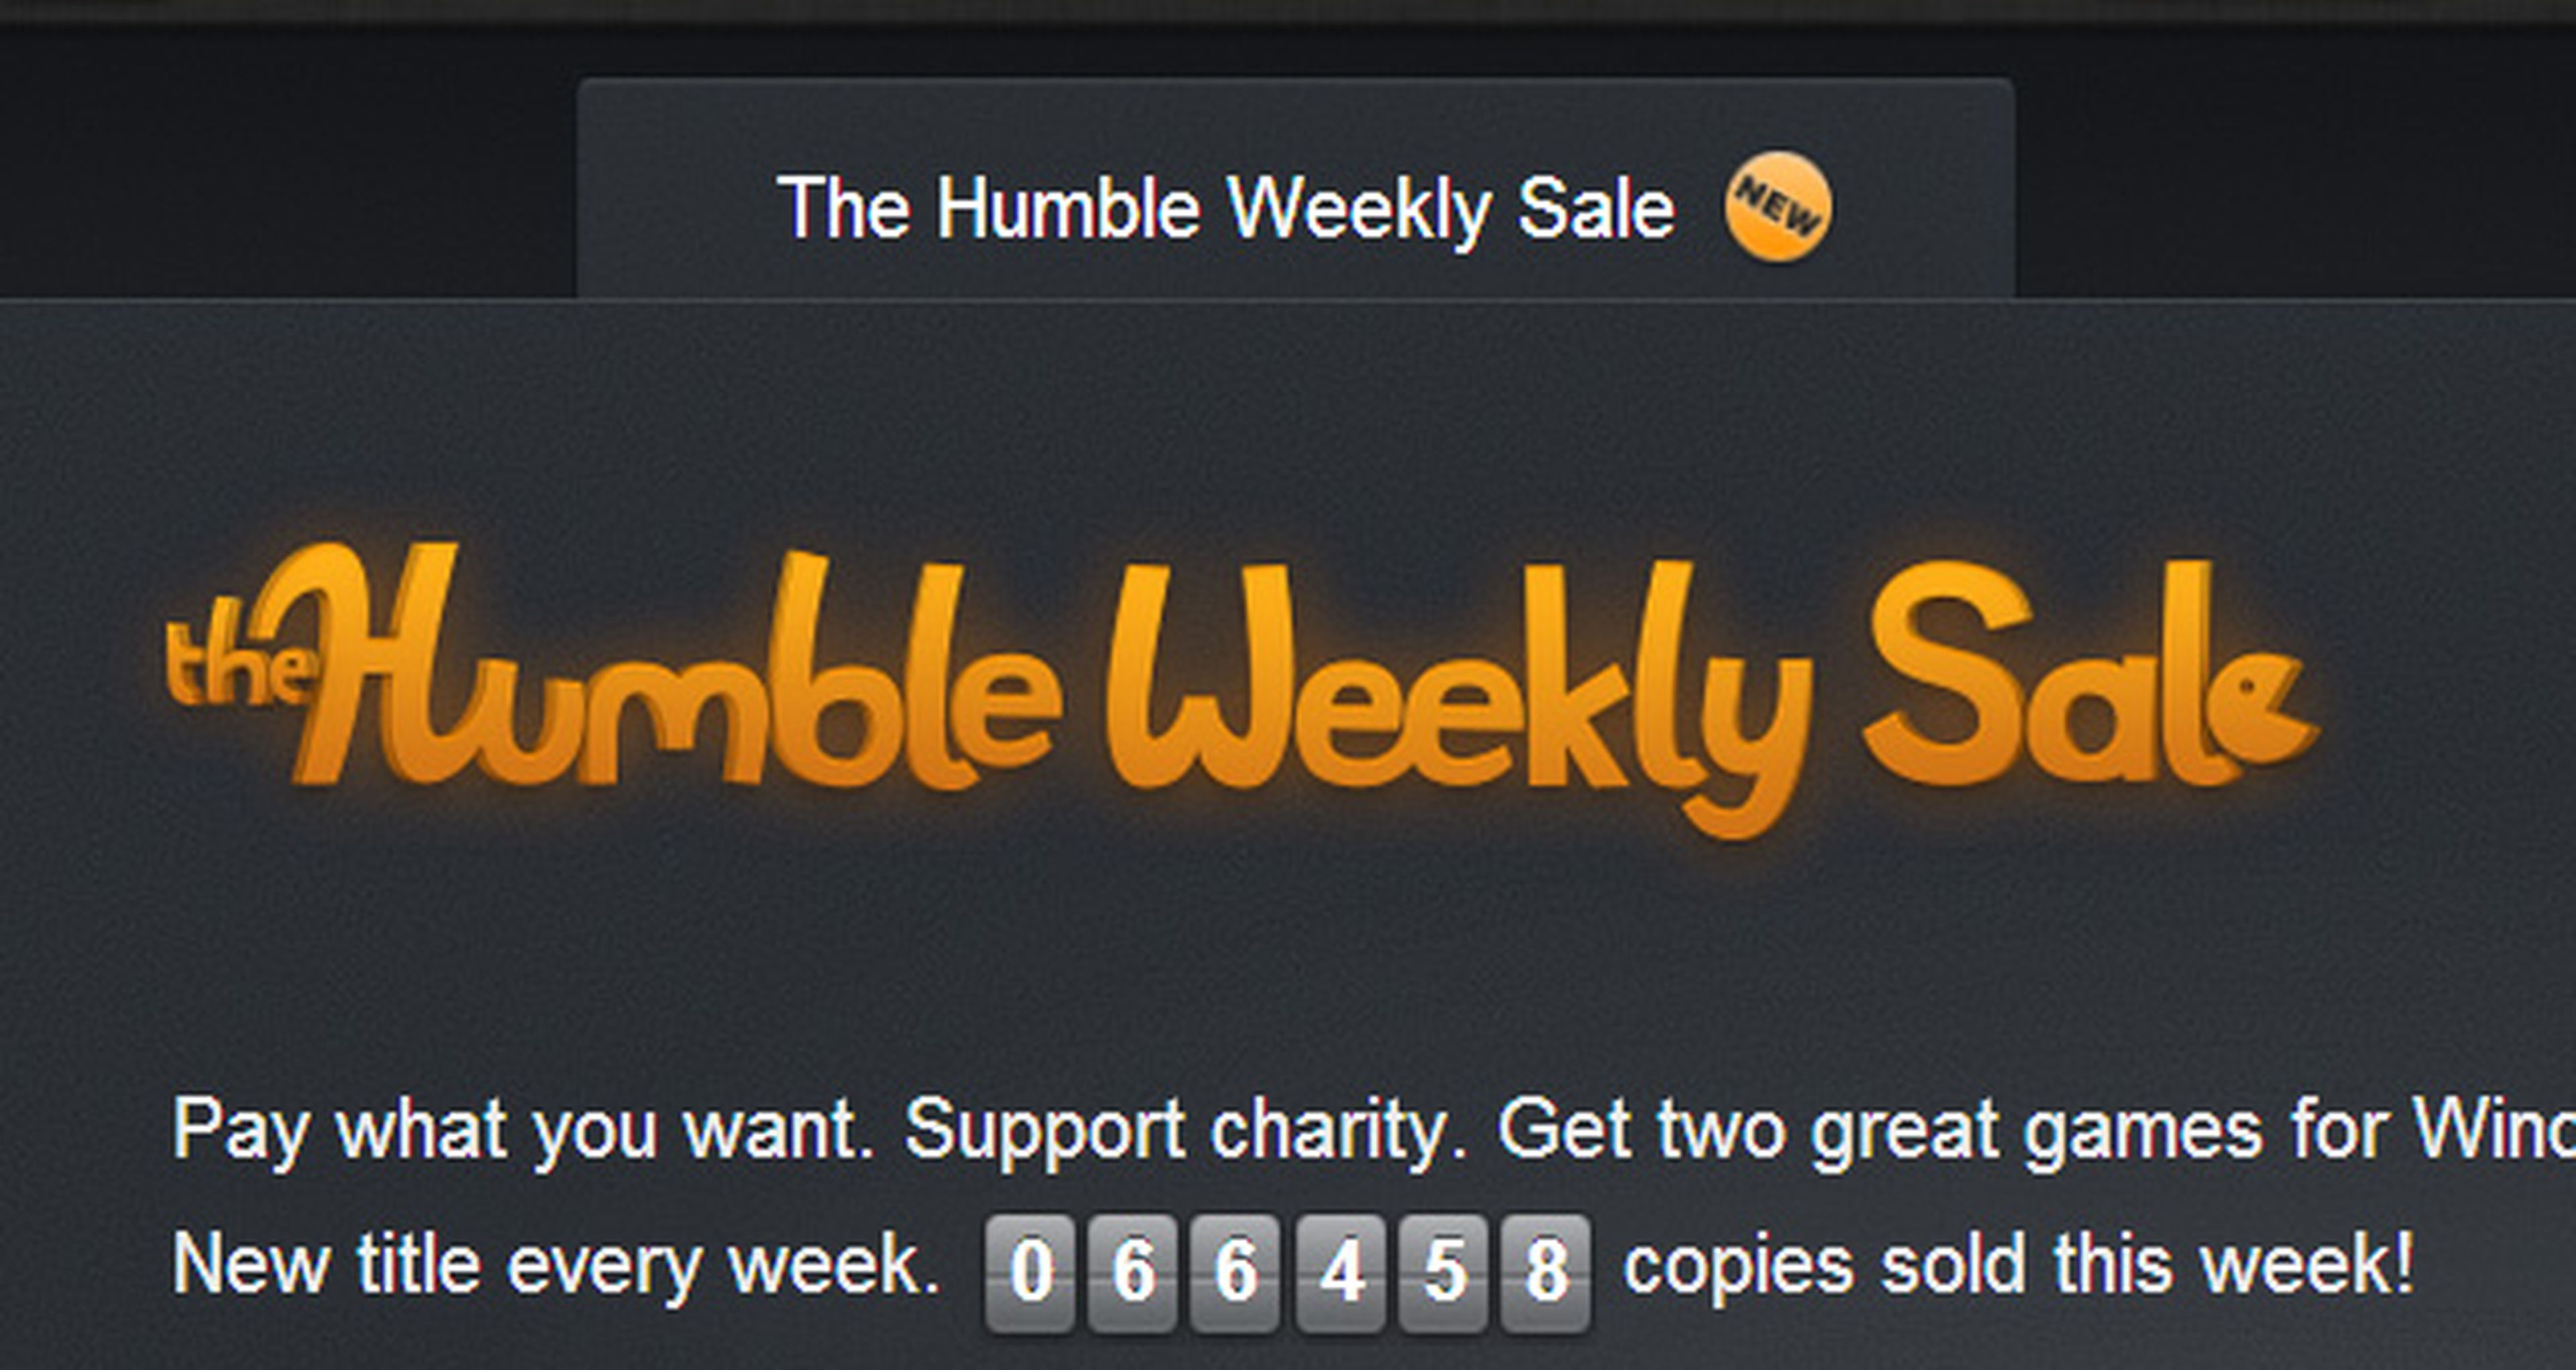 Vuelve the Humble Weekly Sale, ¡con Alan Wake!